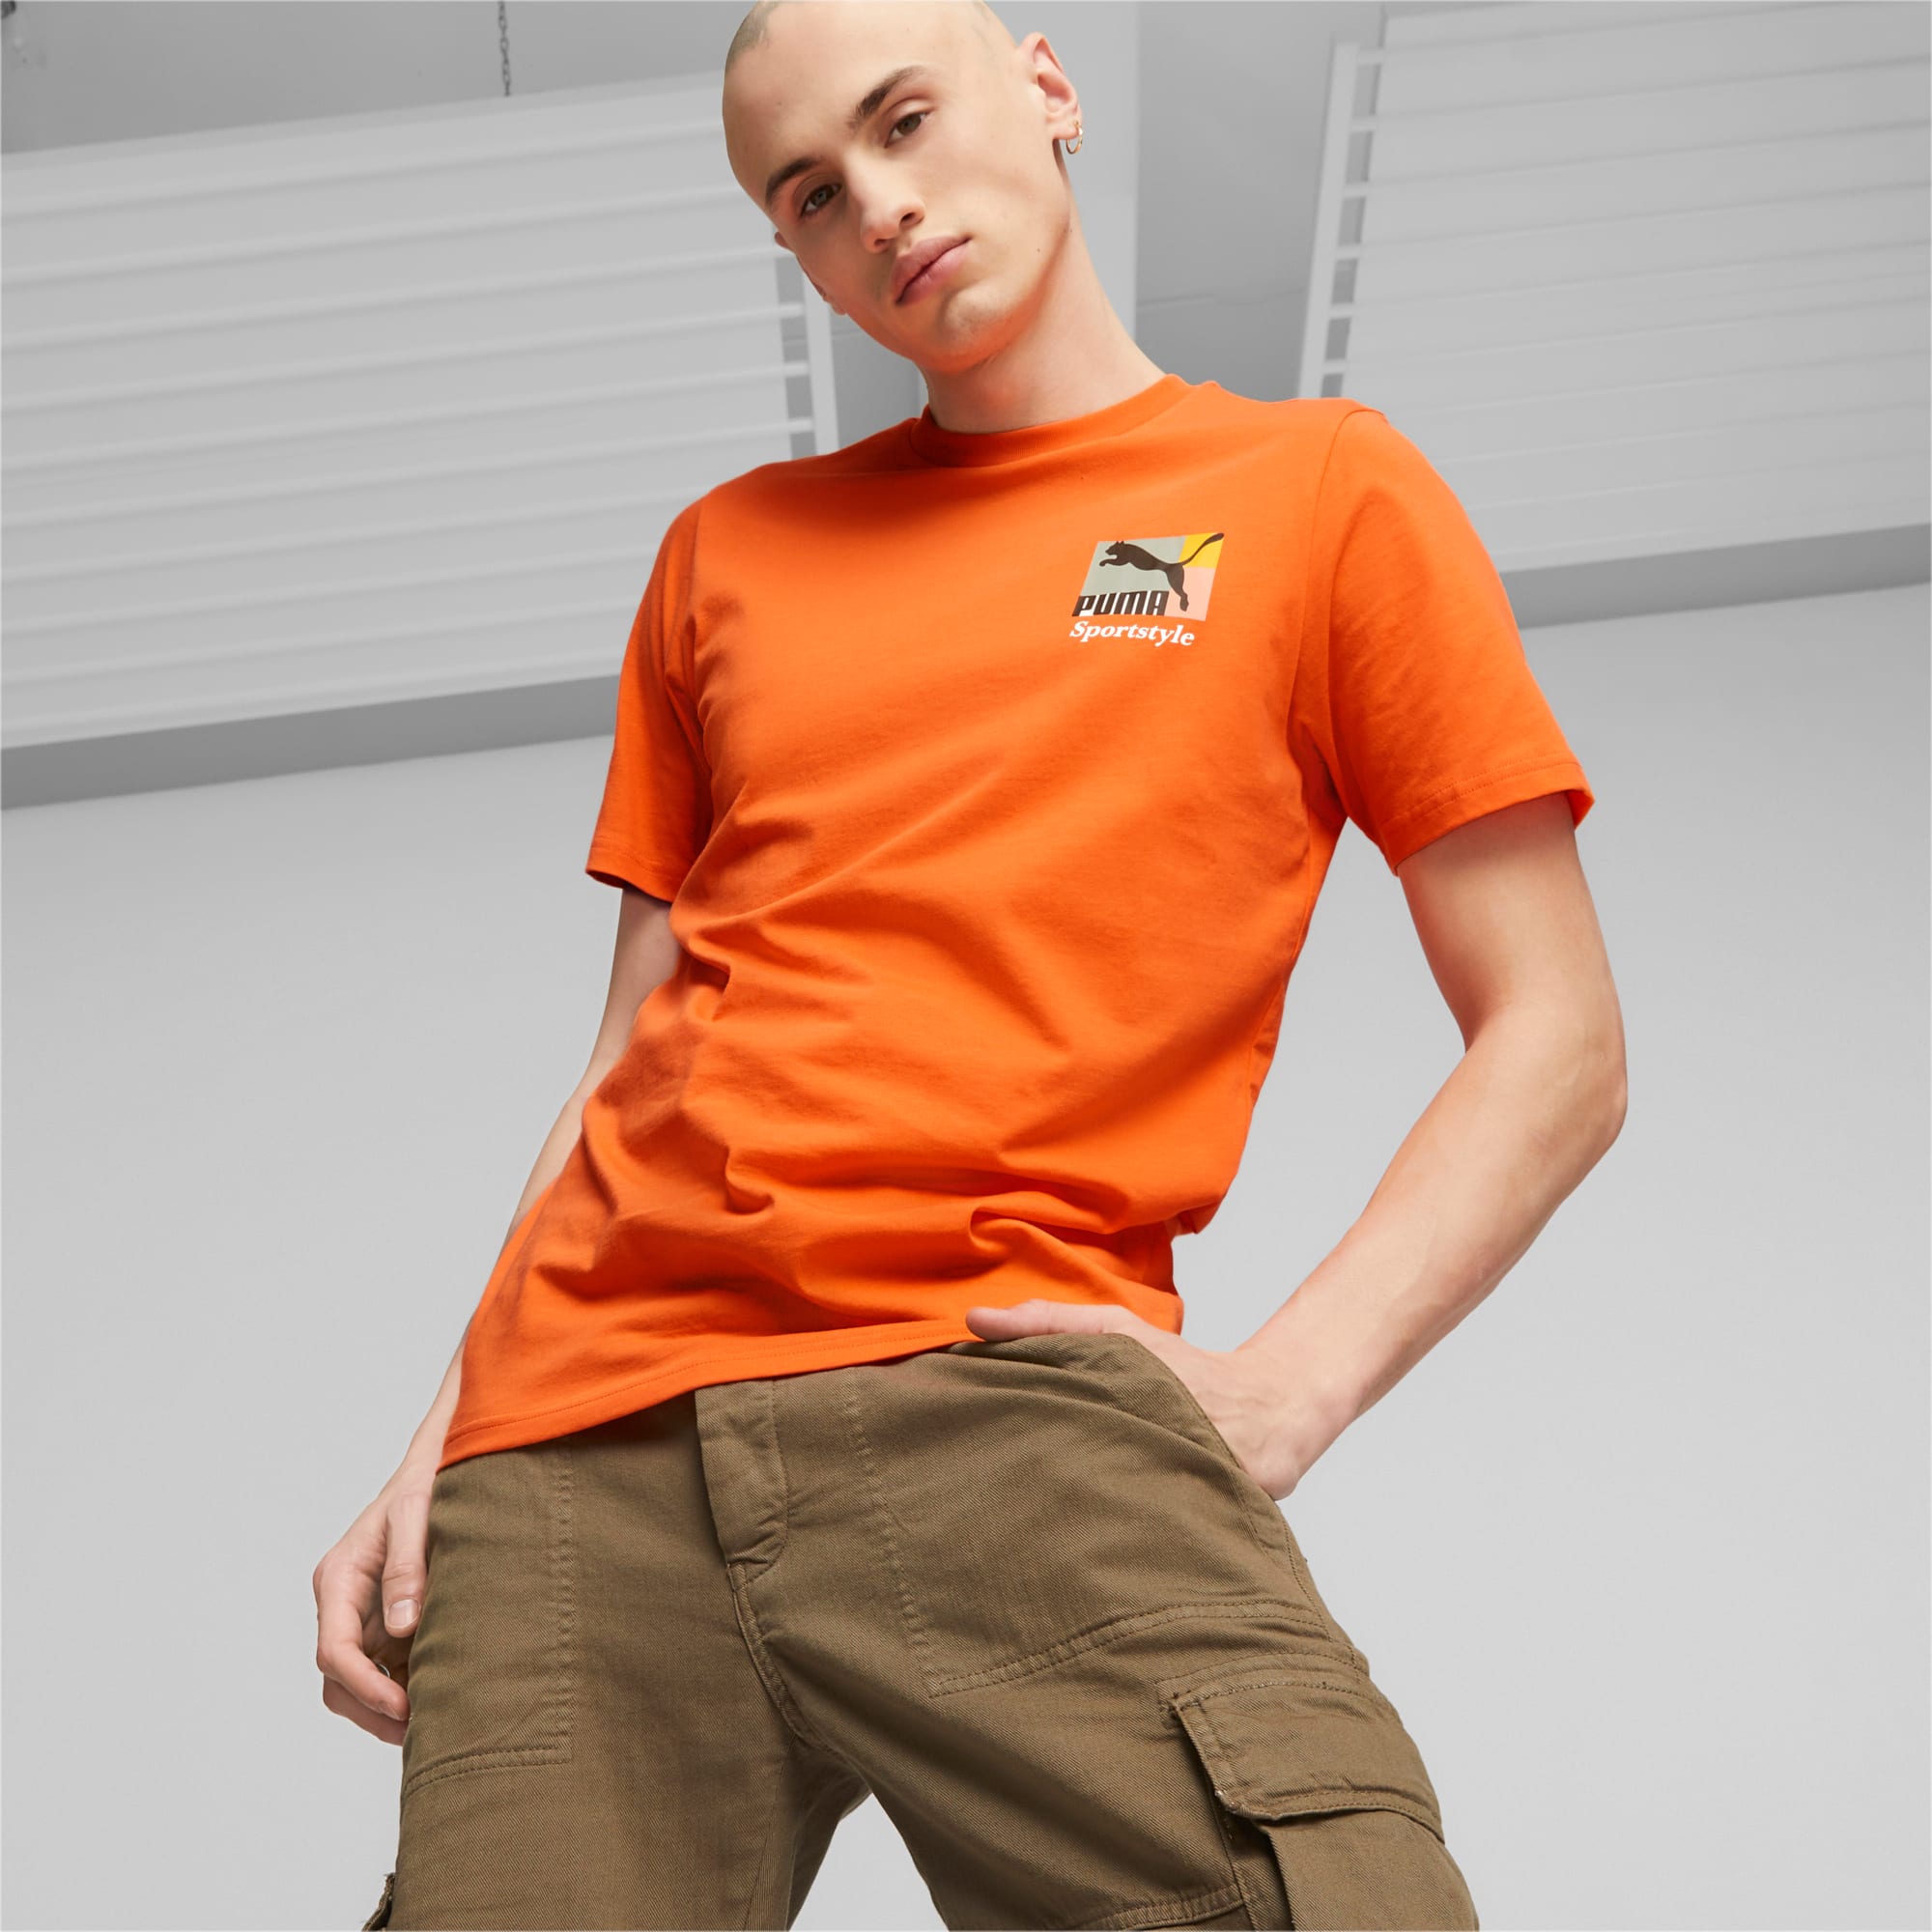 PUMA Classics Brand Love Men's T-Shirt, Hot Heat, Size XS, Clothing